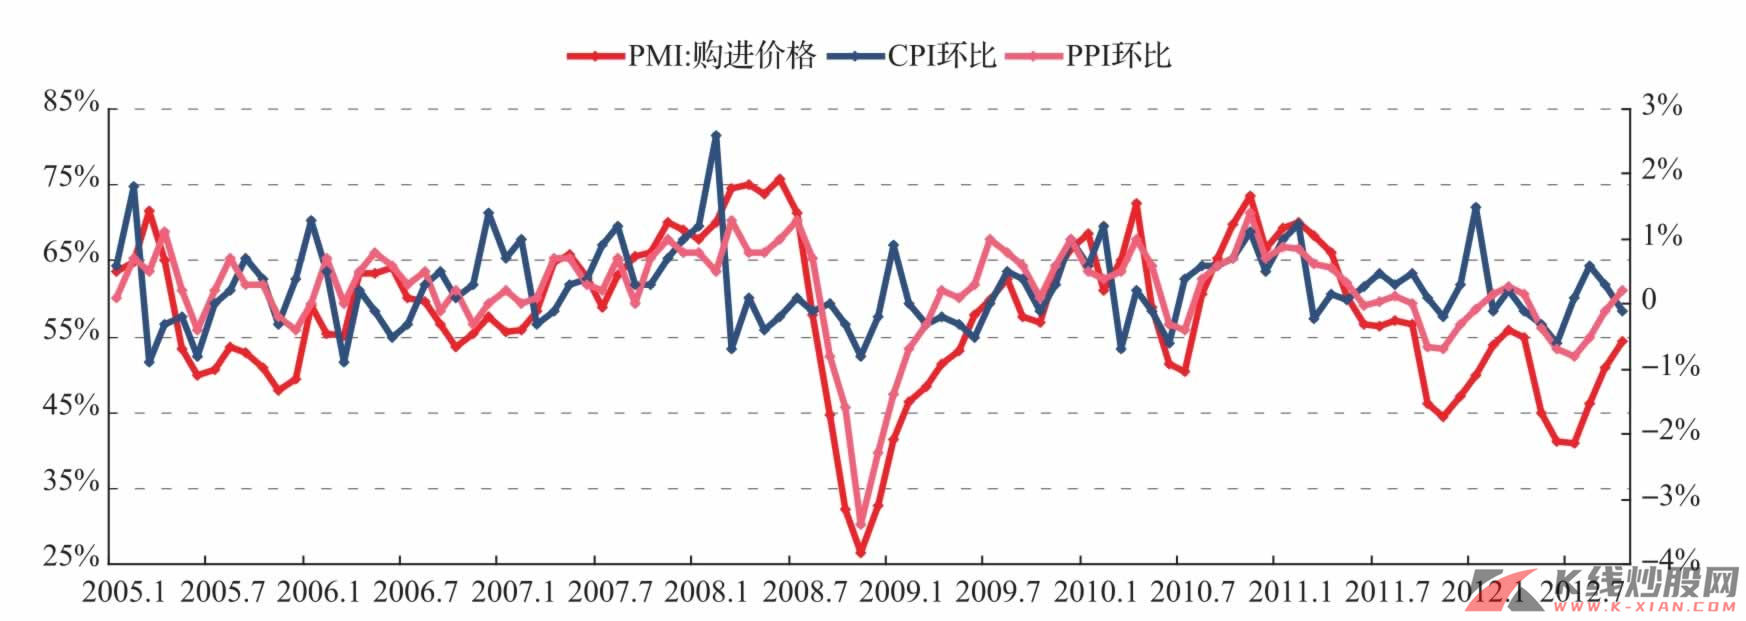 PMI购进价格季调趋势、PPI环比、CPI环比